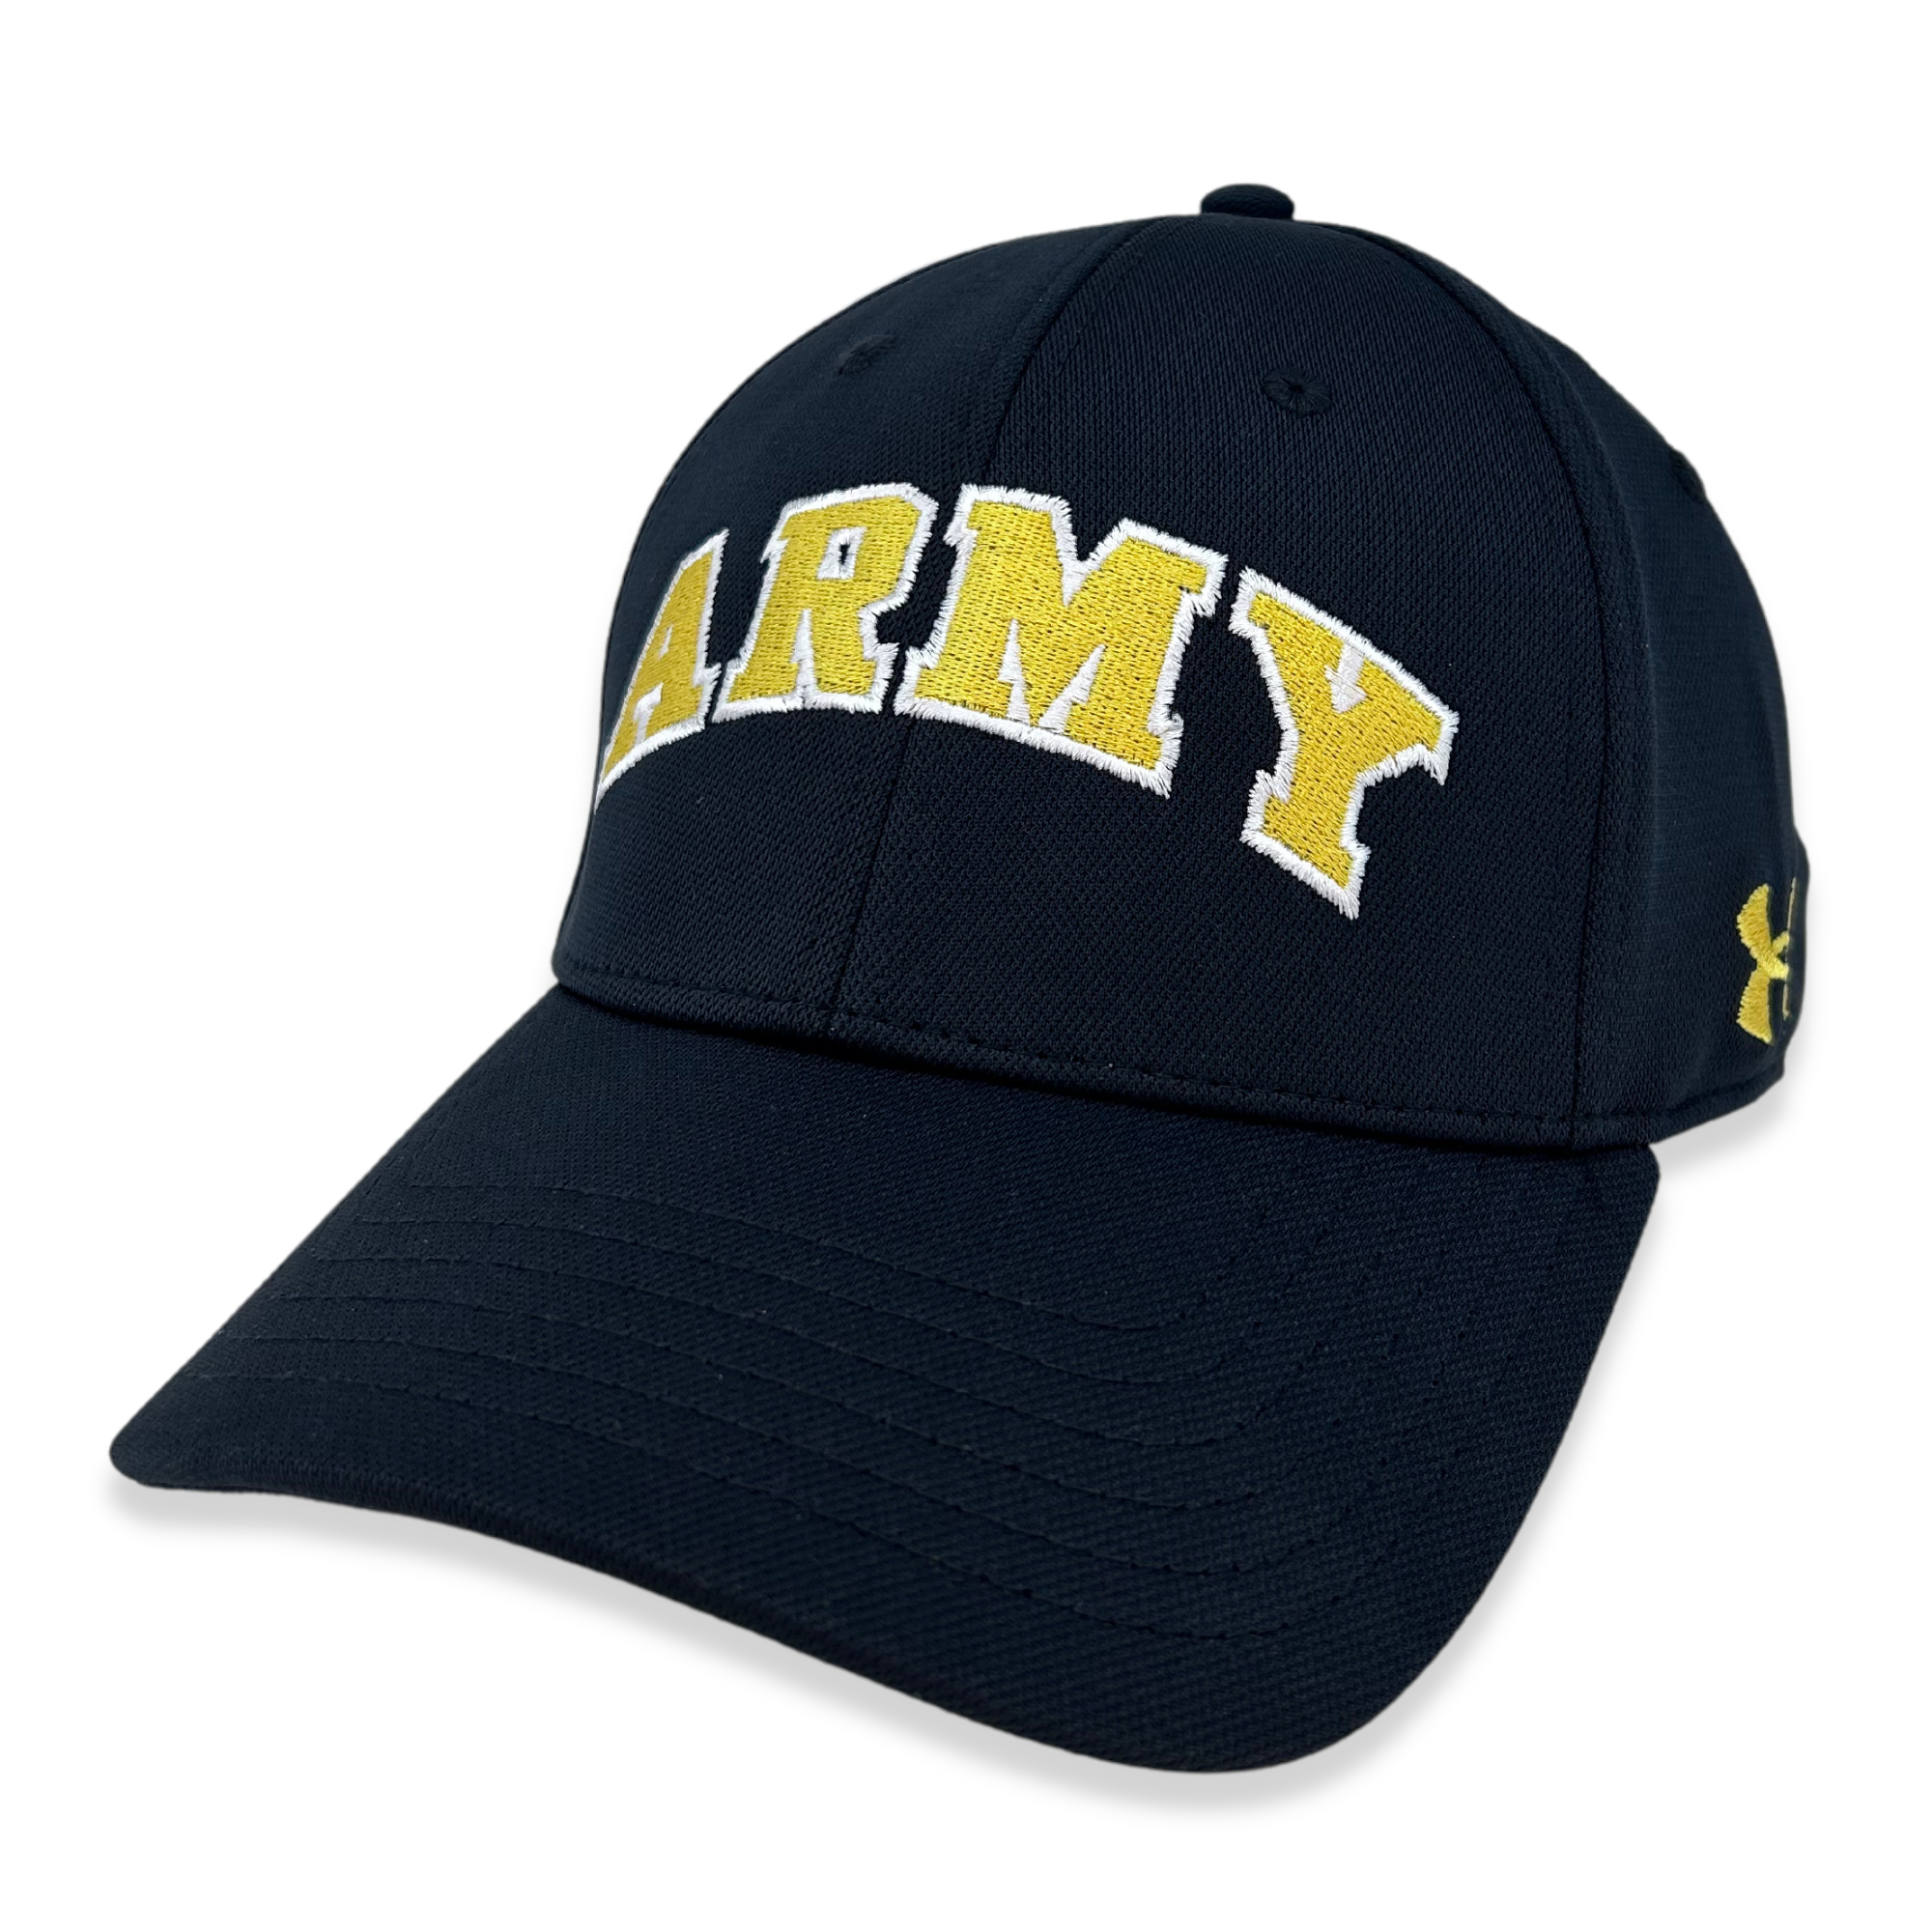 Armour Hat Under Blitzing Fit Flex (Black) Army